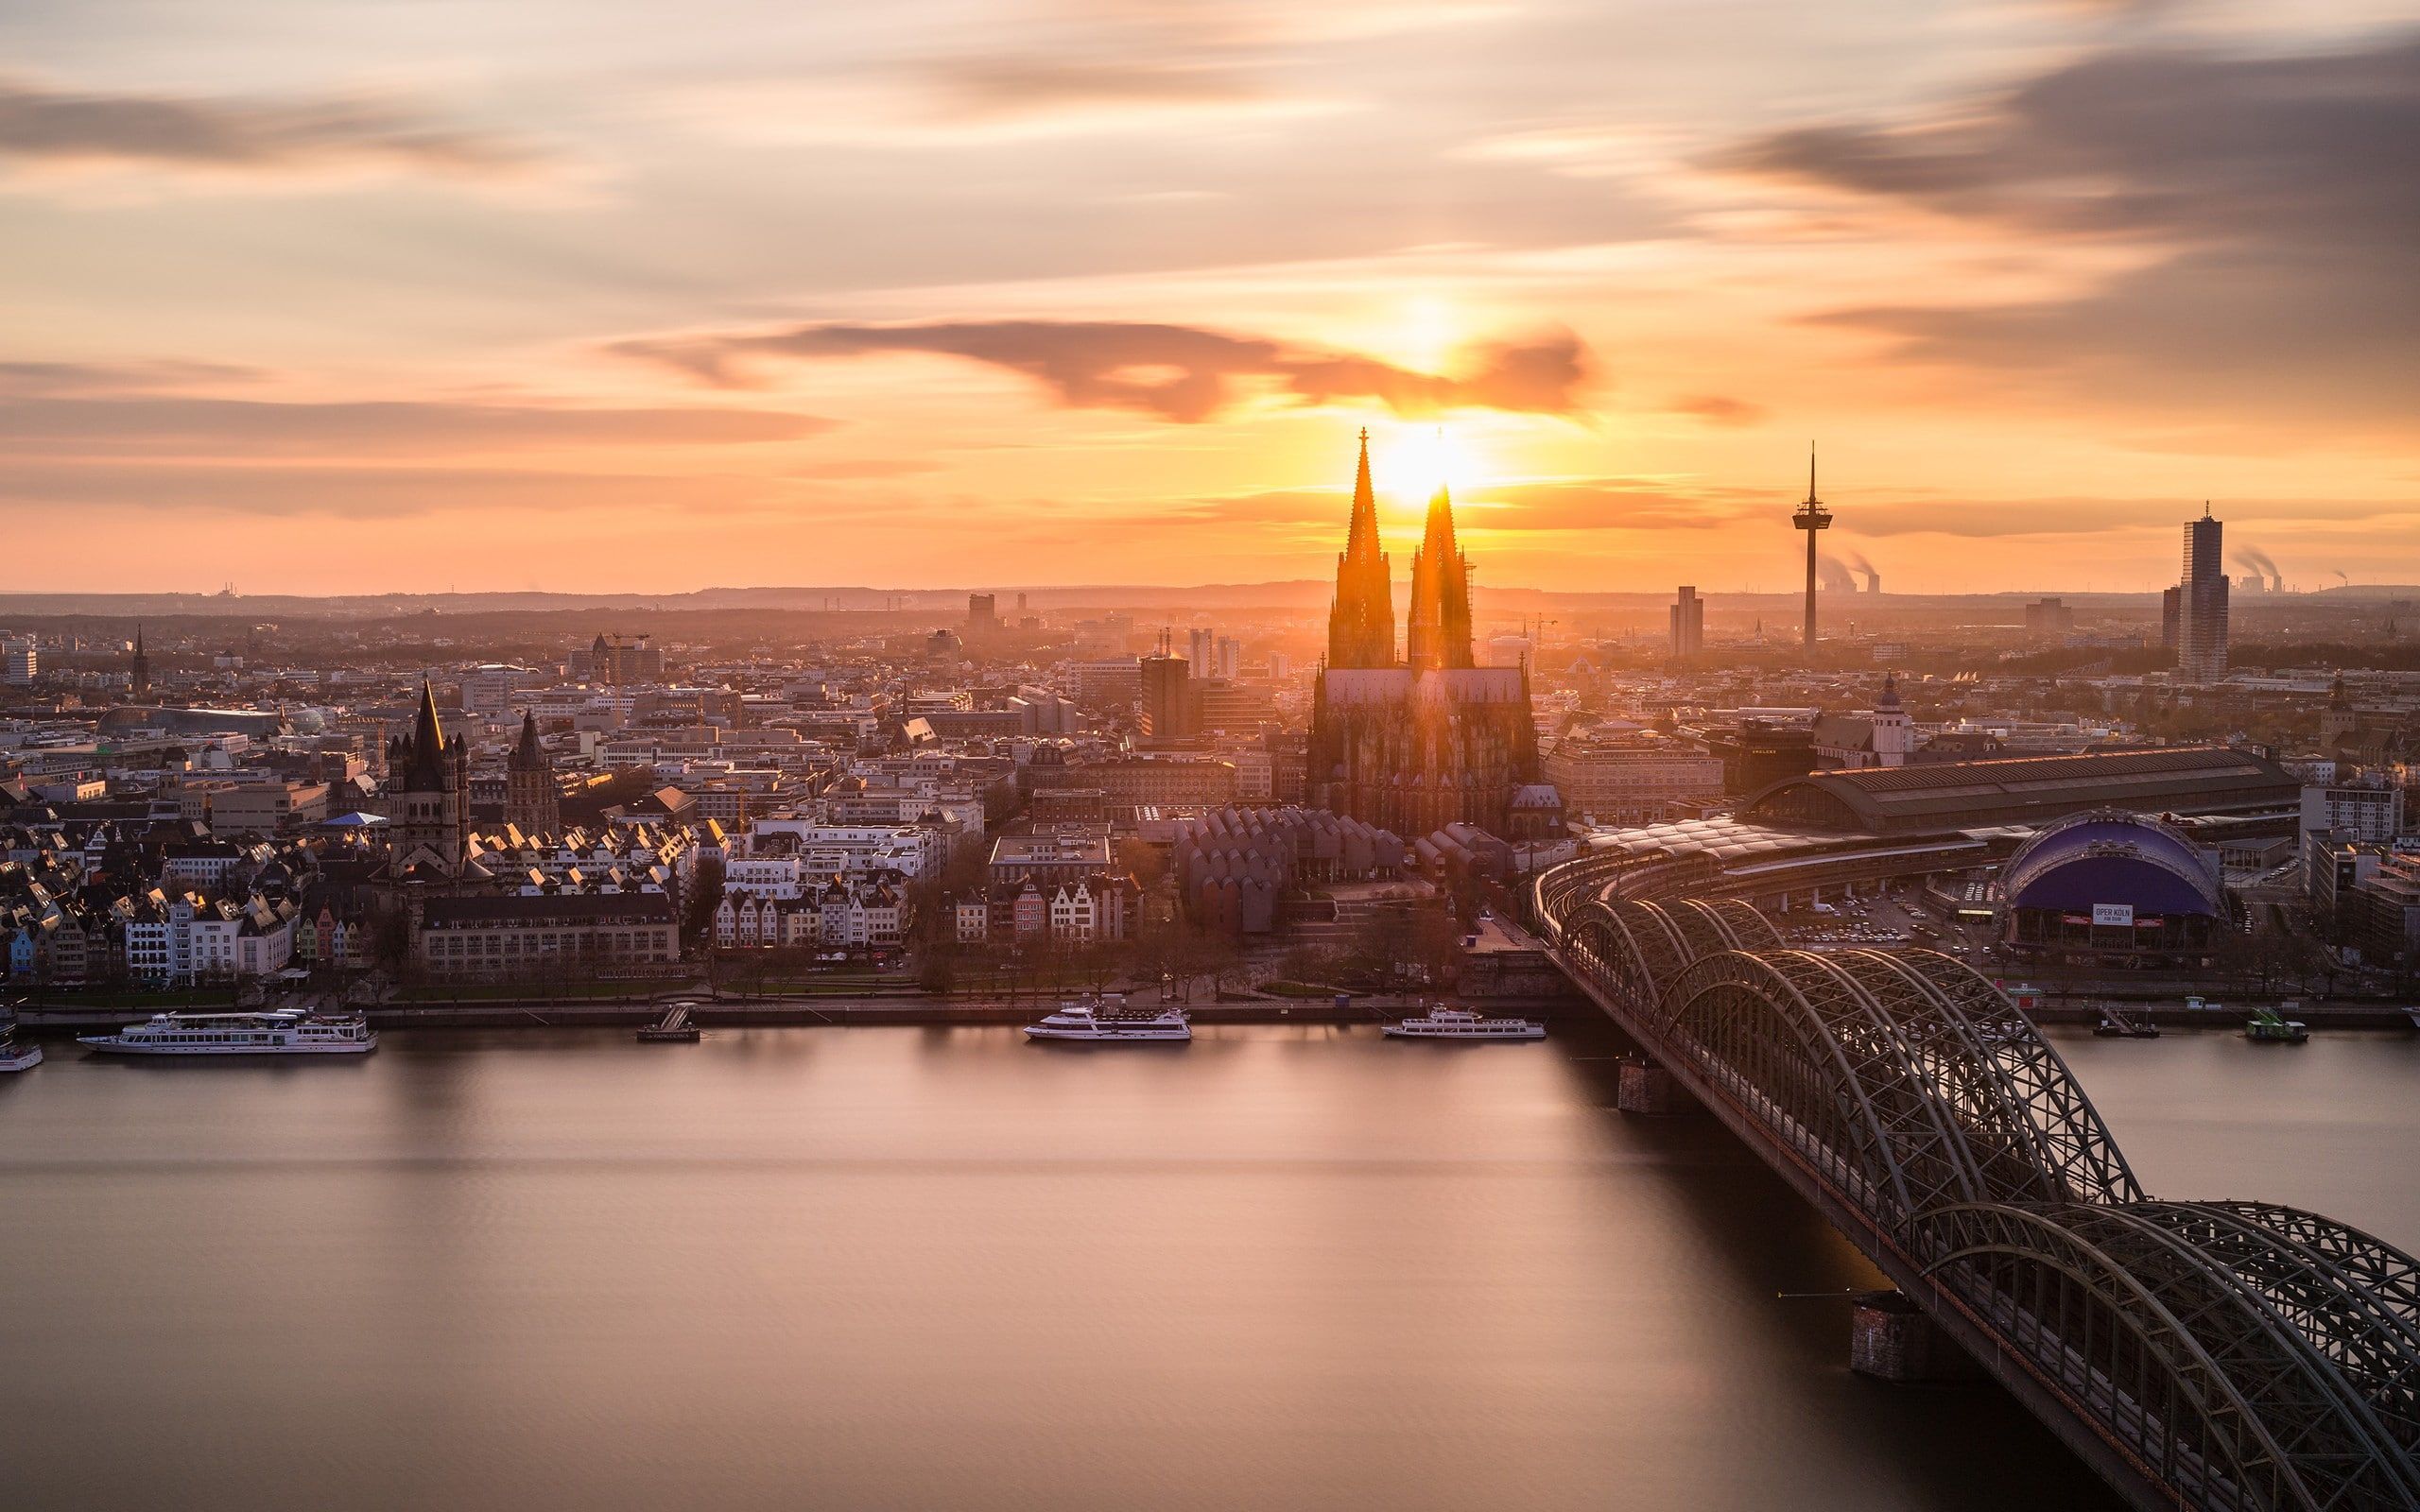  Köln Desktop Hintergrundbild 2560x1600. Cologne #köln #Germany #sunset Cologne Cathedral #Rhein K #wallpaper #hdwallpaper #desktop. Desktop wallpaper, Architecture wallpaper, Facebook cover photo